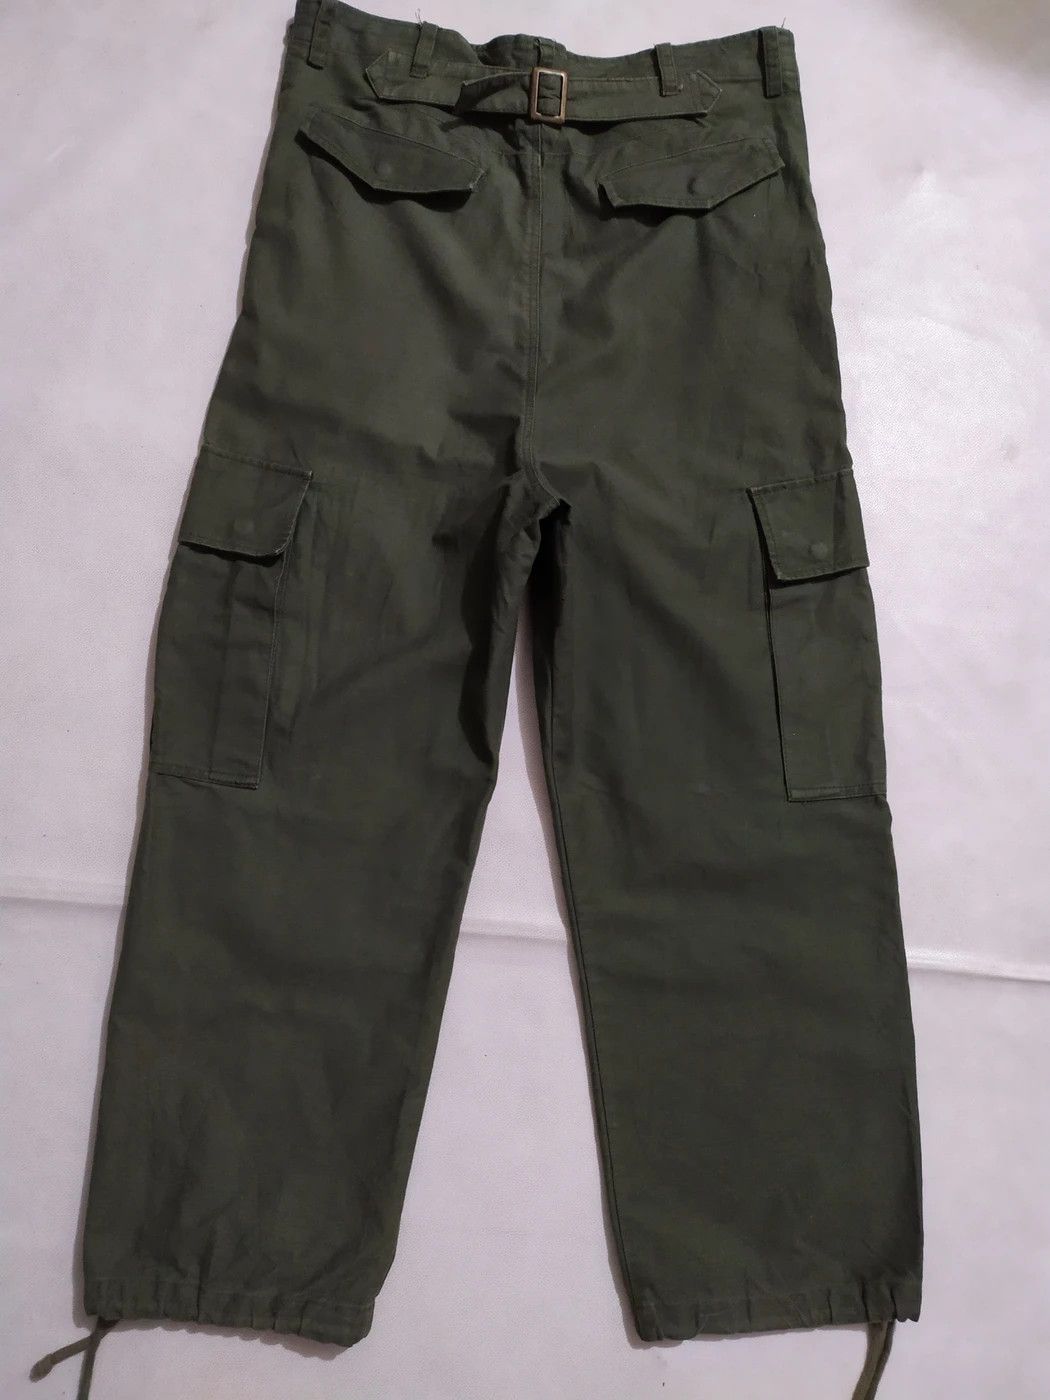 Japanese Brand Cargo Pants Size US 31 - 6 Thumbnail